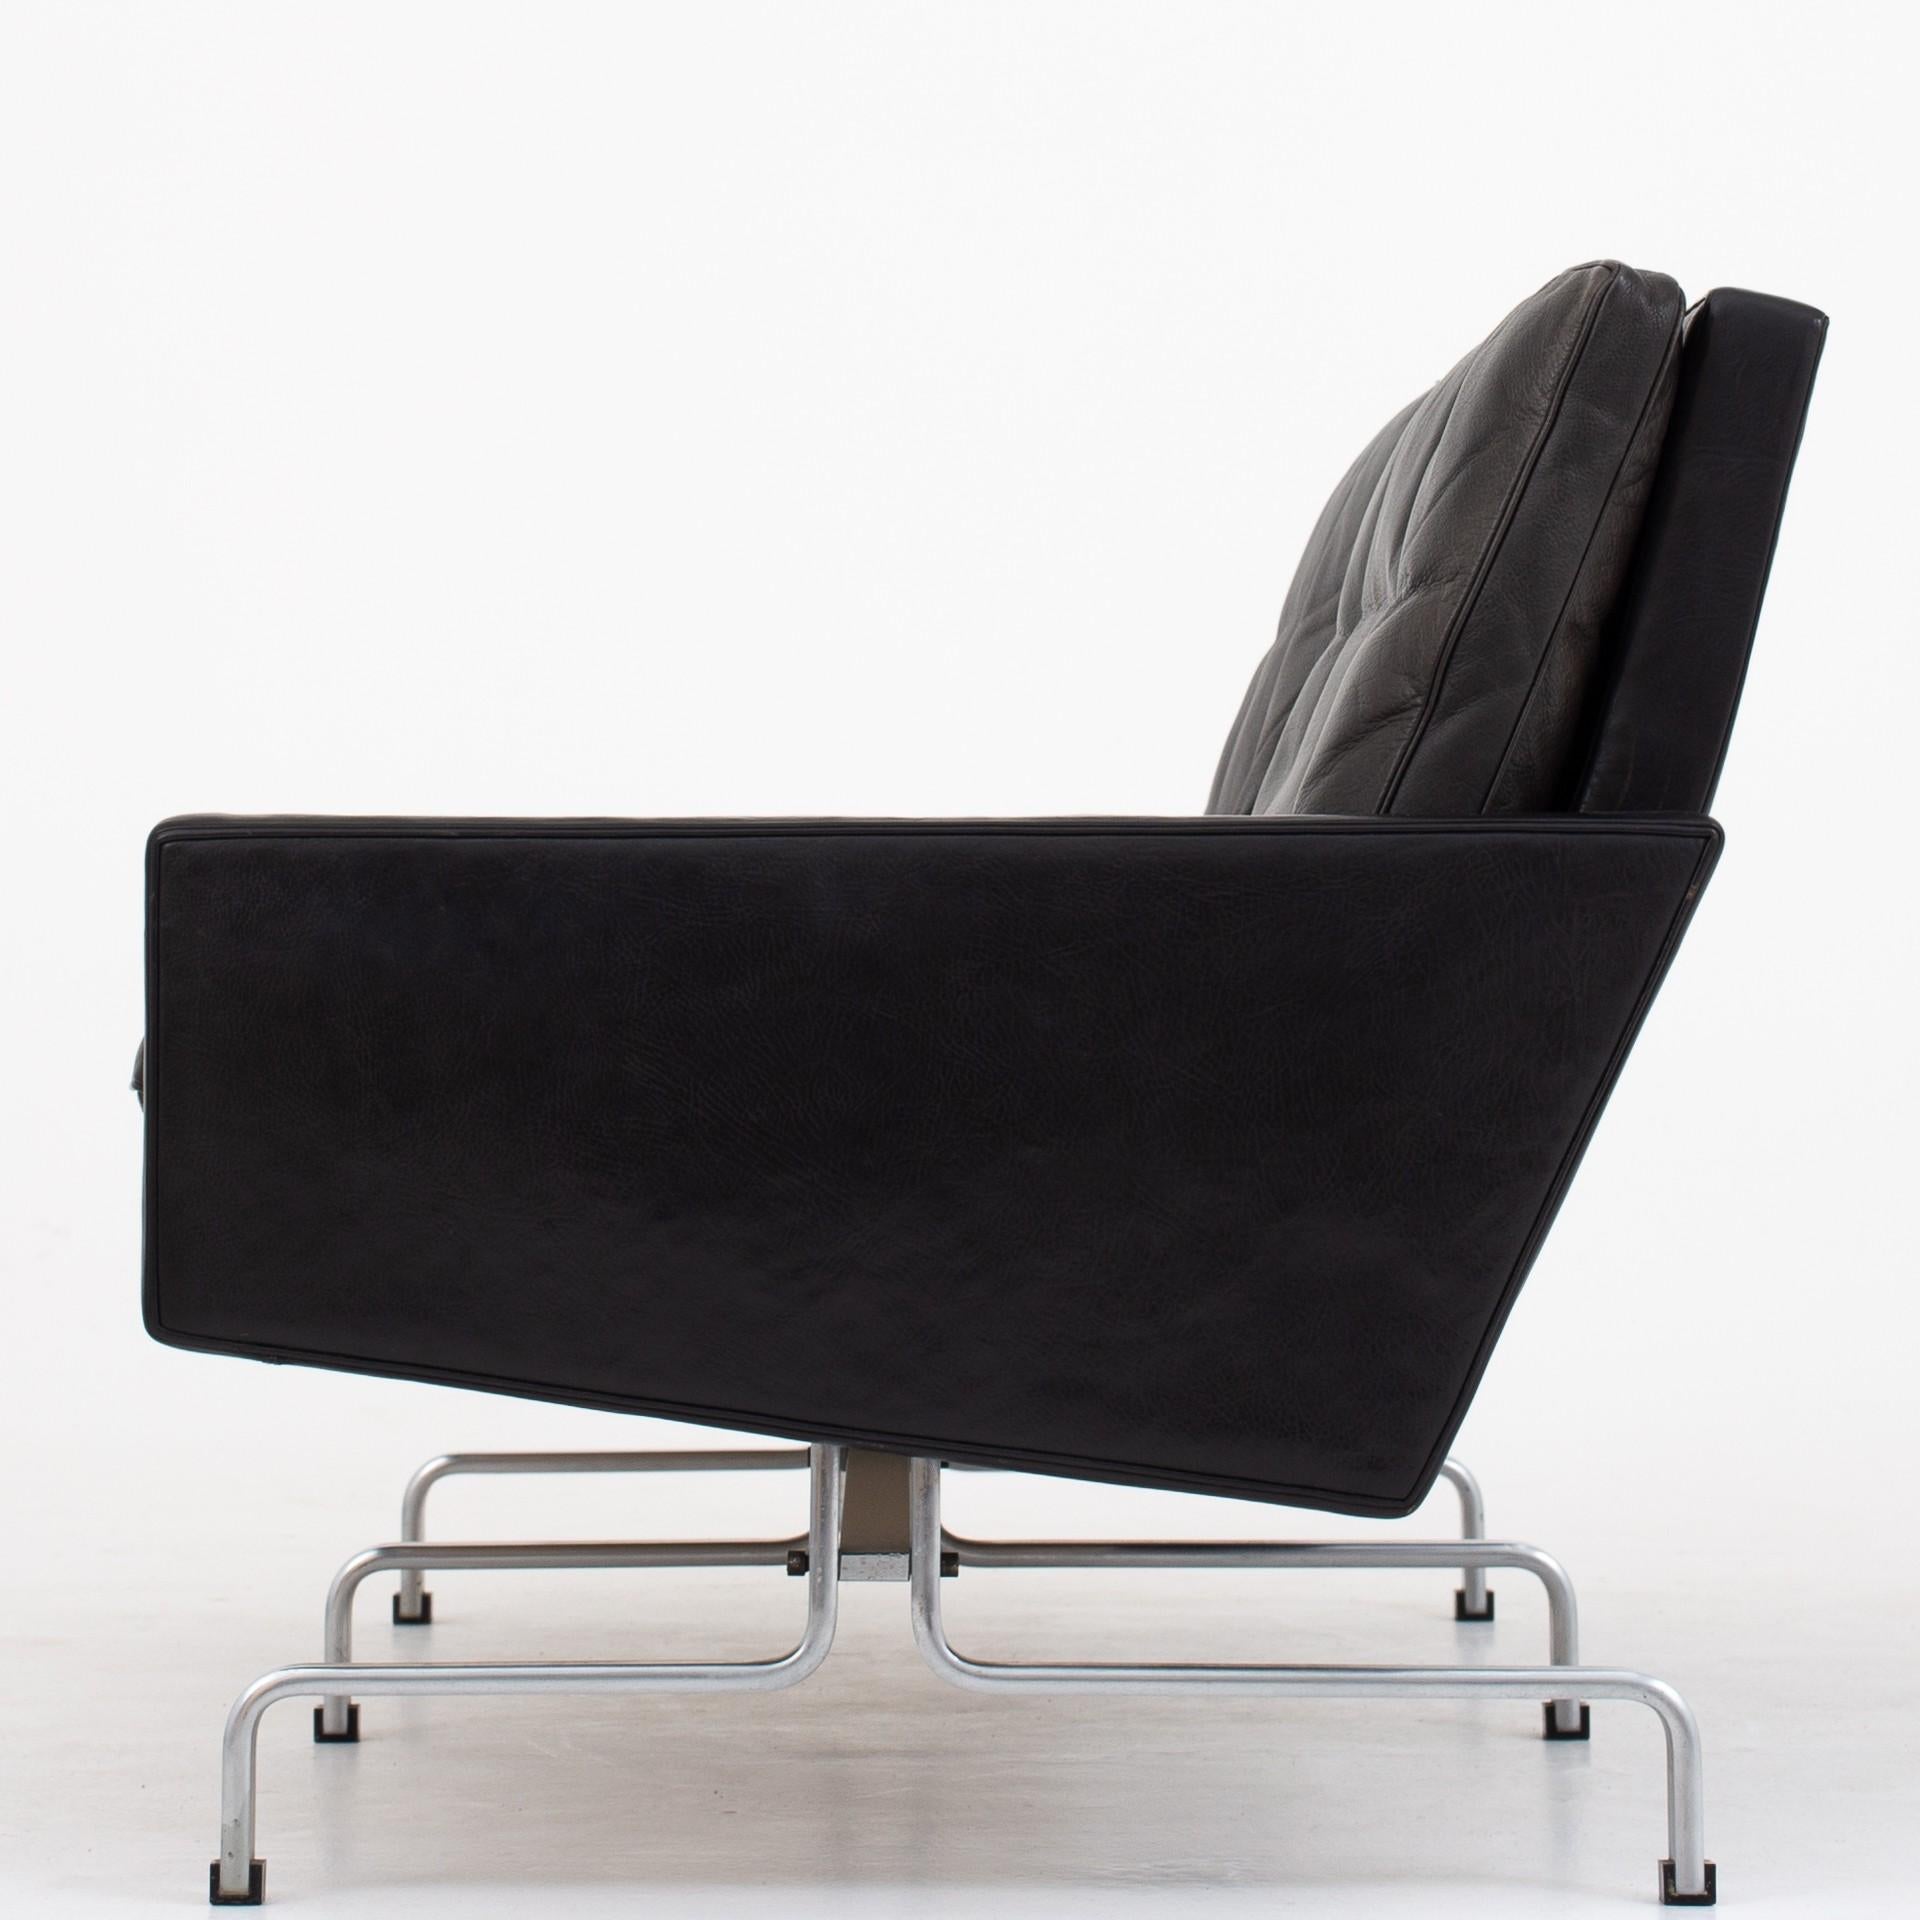 PK 31/2 – 2-seat sofa in patinated black leather on matt chromed steel frame. Two pieces in stock. Maker E. Kold Christensen. Design 1958.